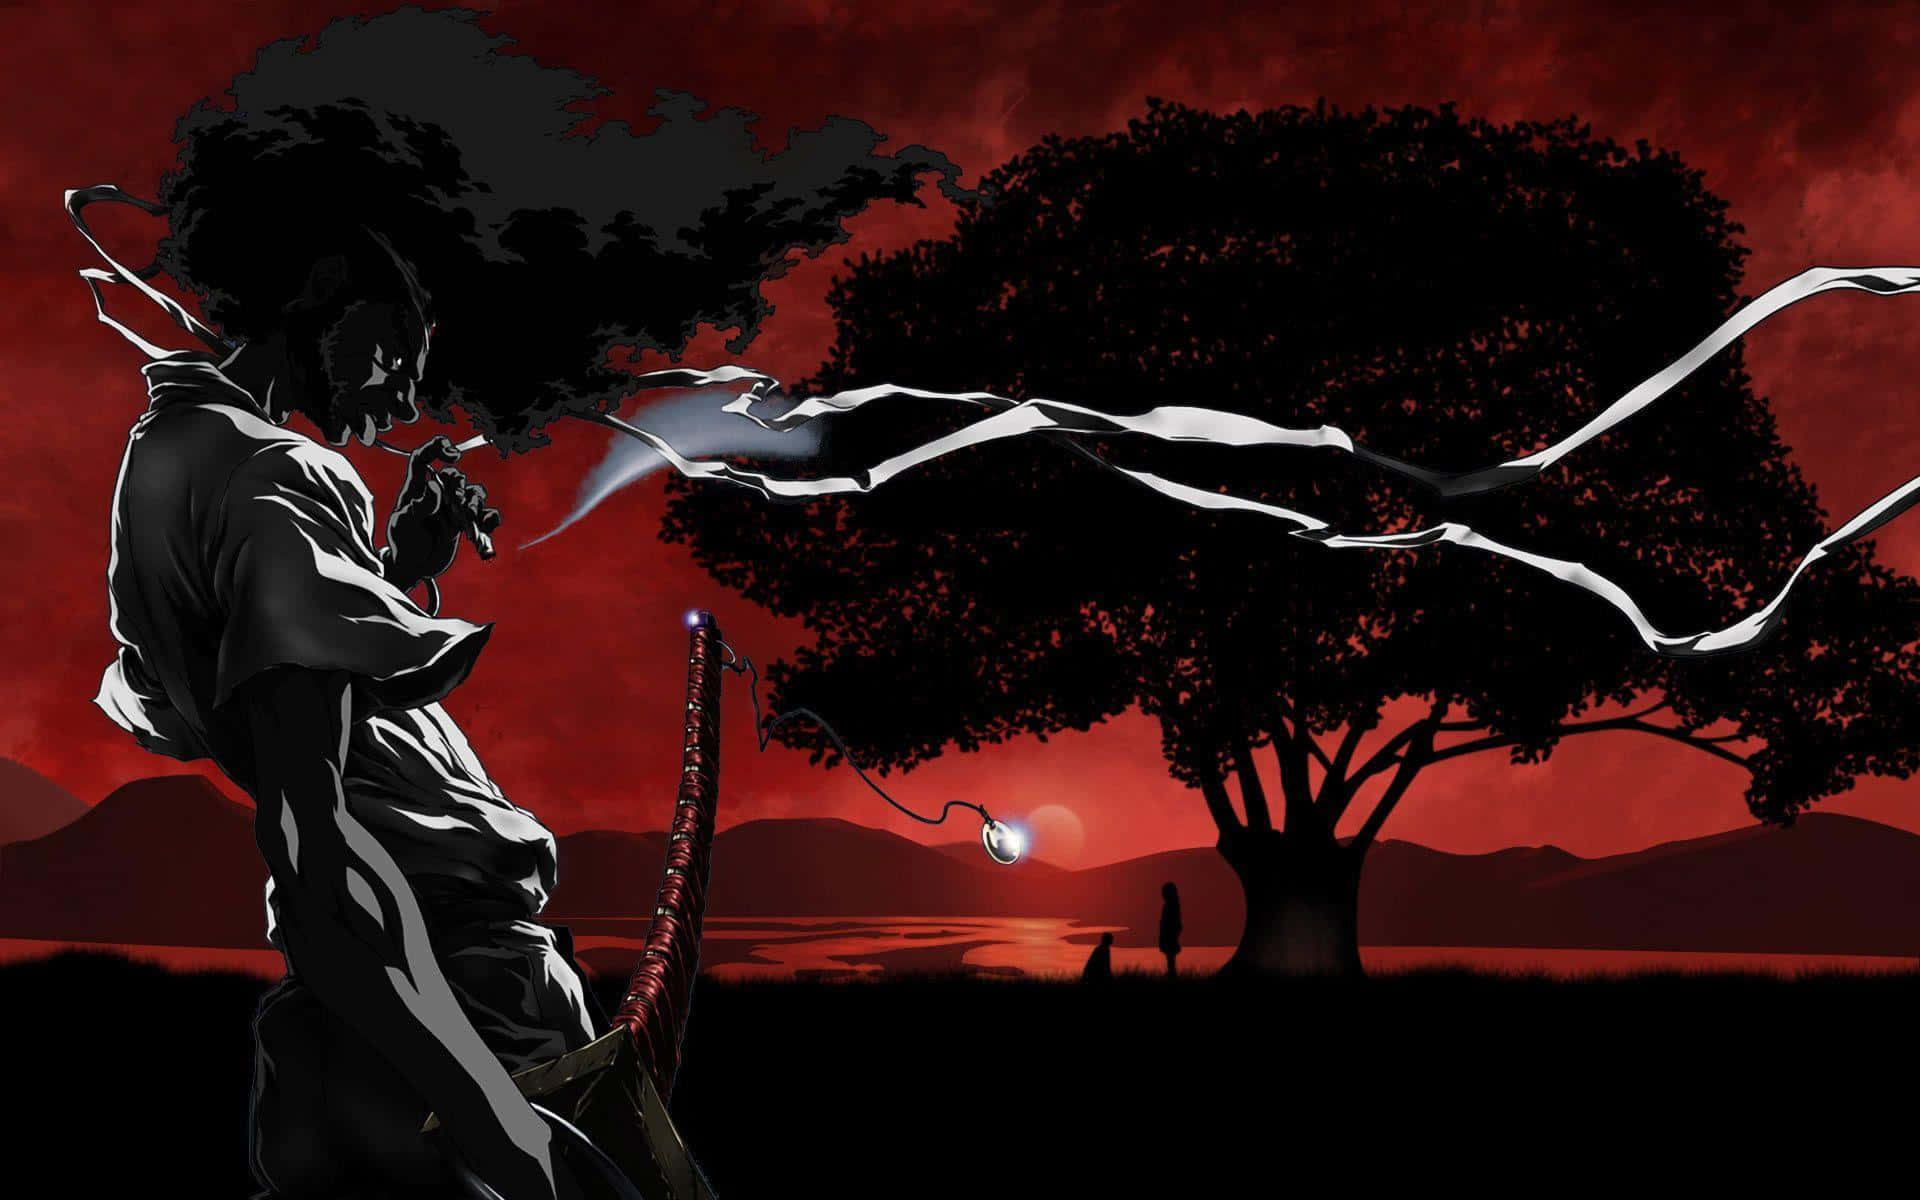 Afro Samurai in a Fierce Battle Stance Wallpaper